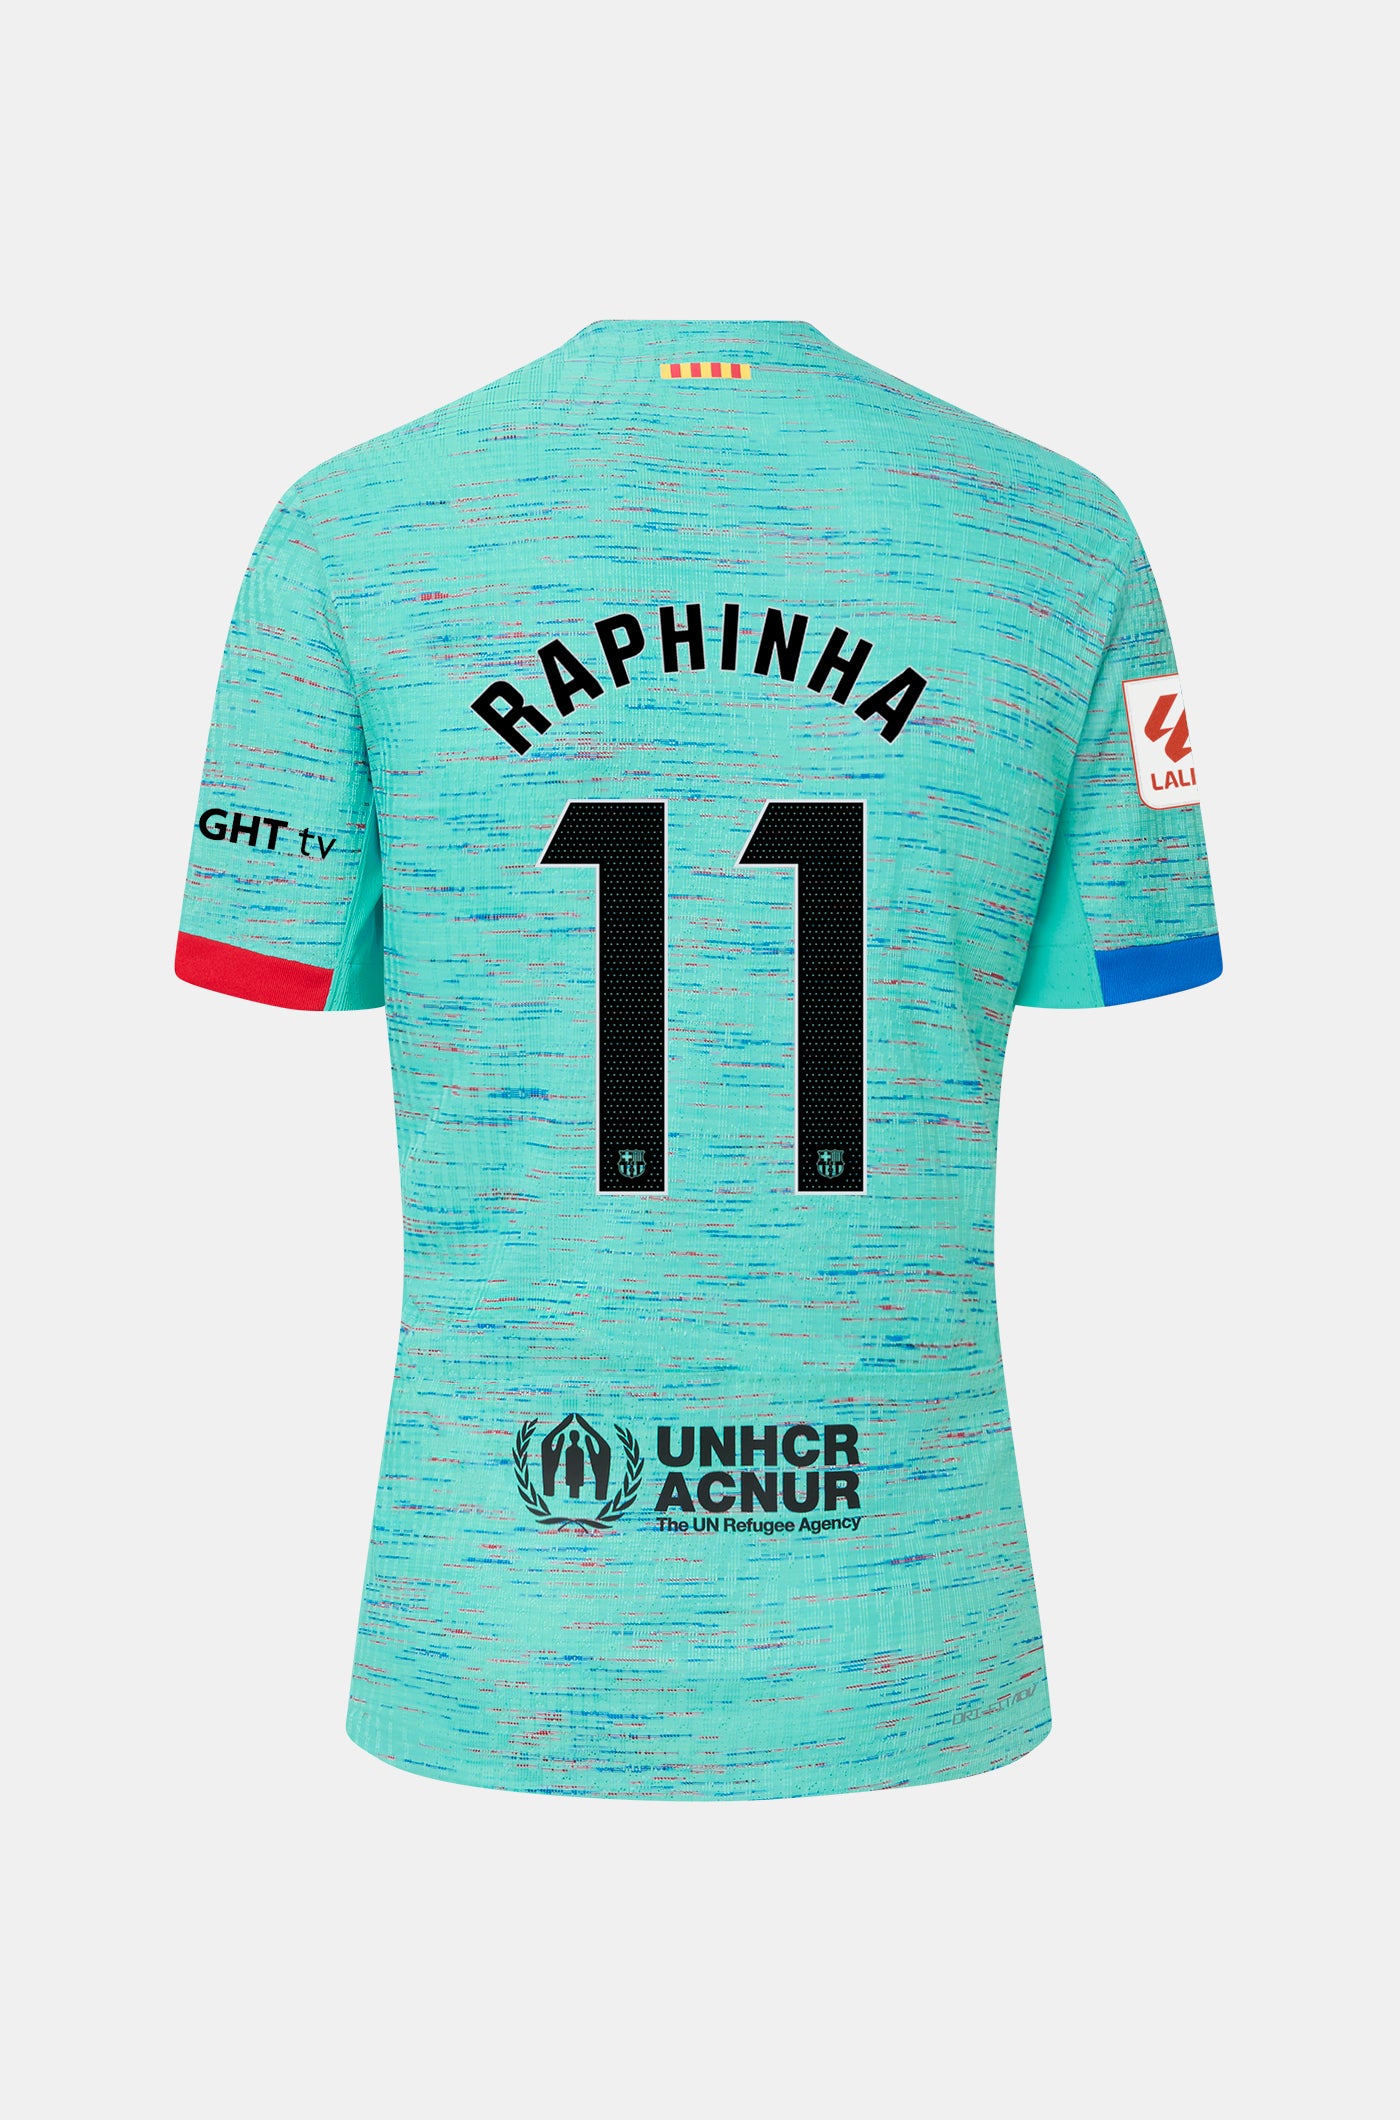 LFP FC Barcelona third shirt 23/24 Player’s Edition  - RAPHINHA